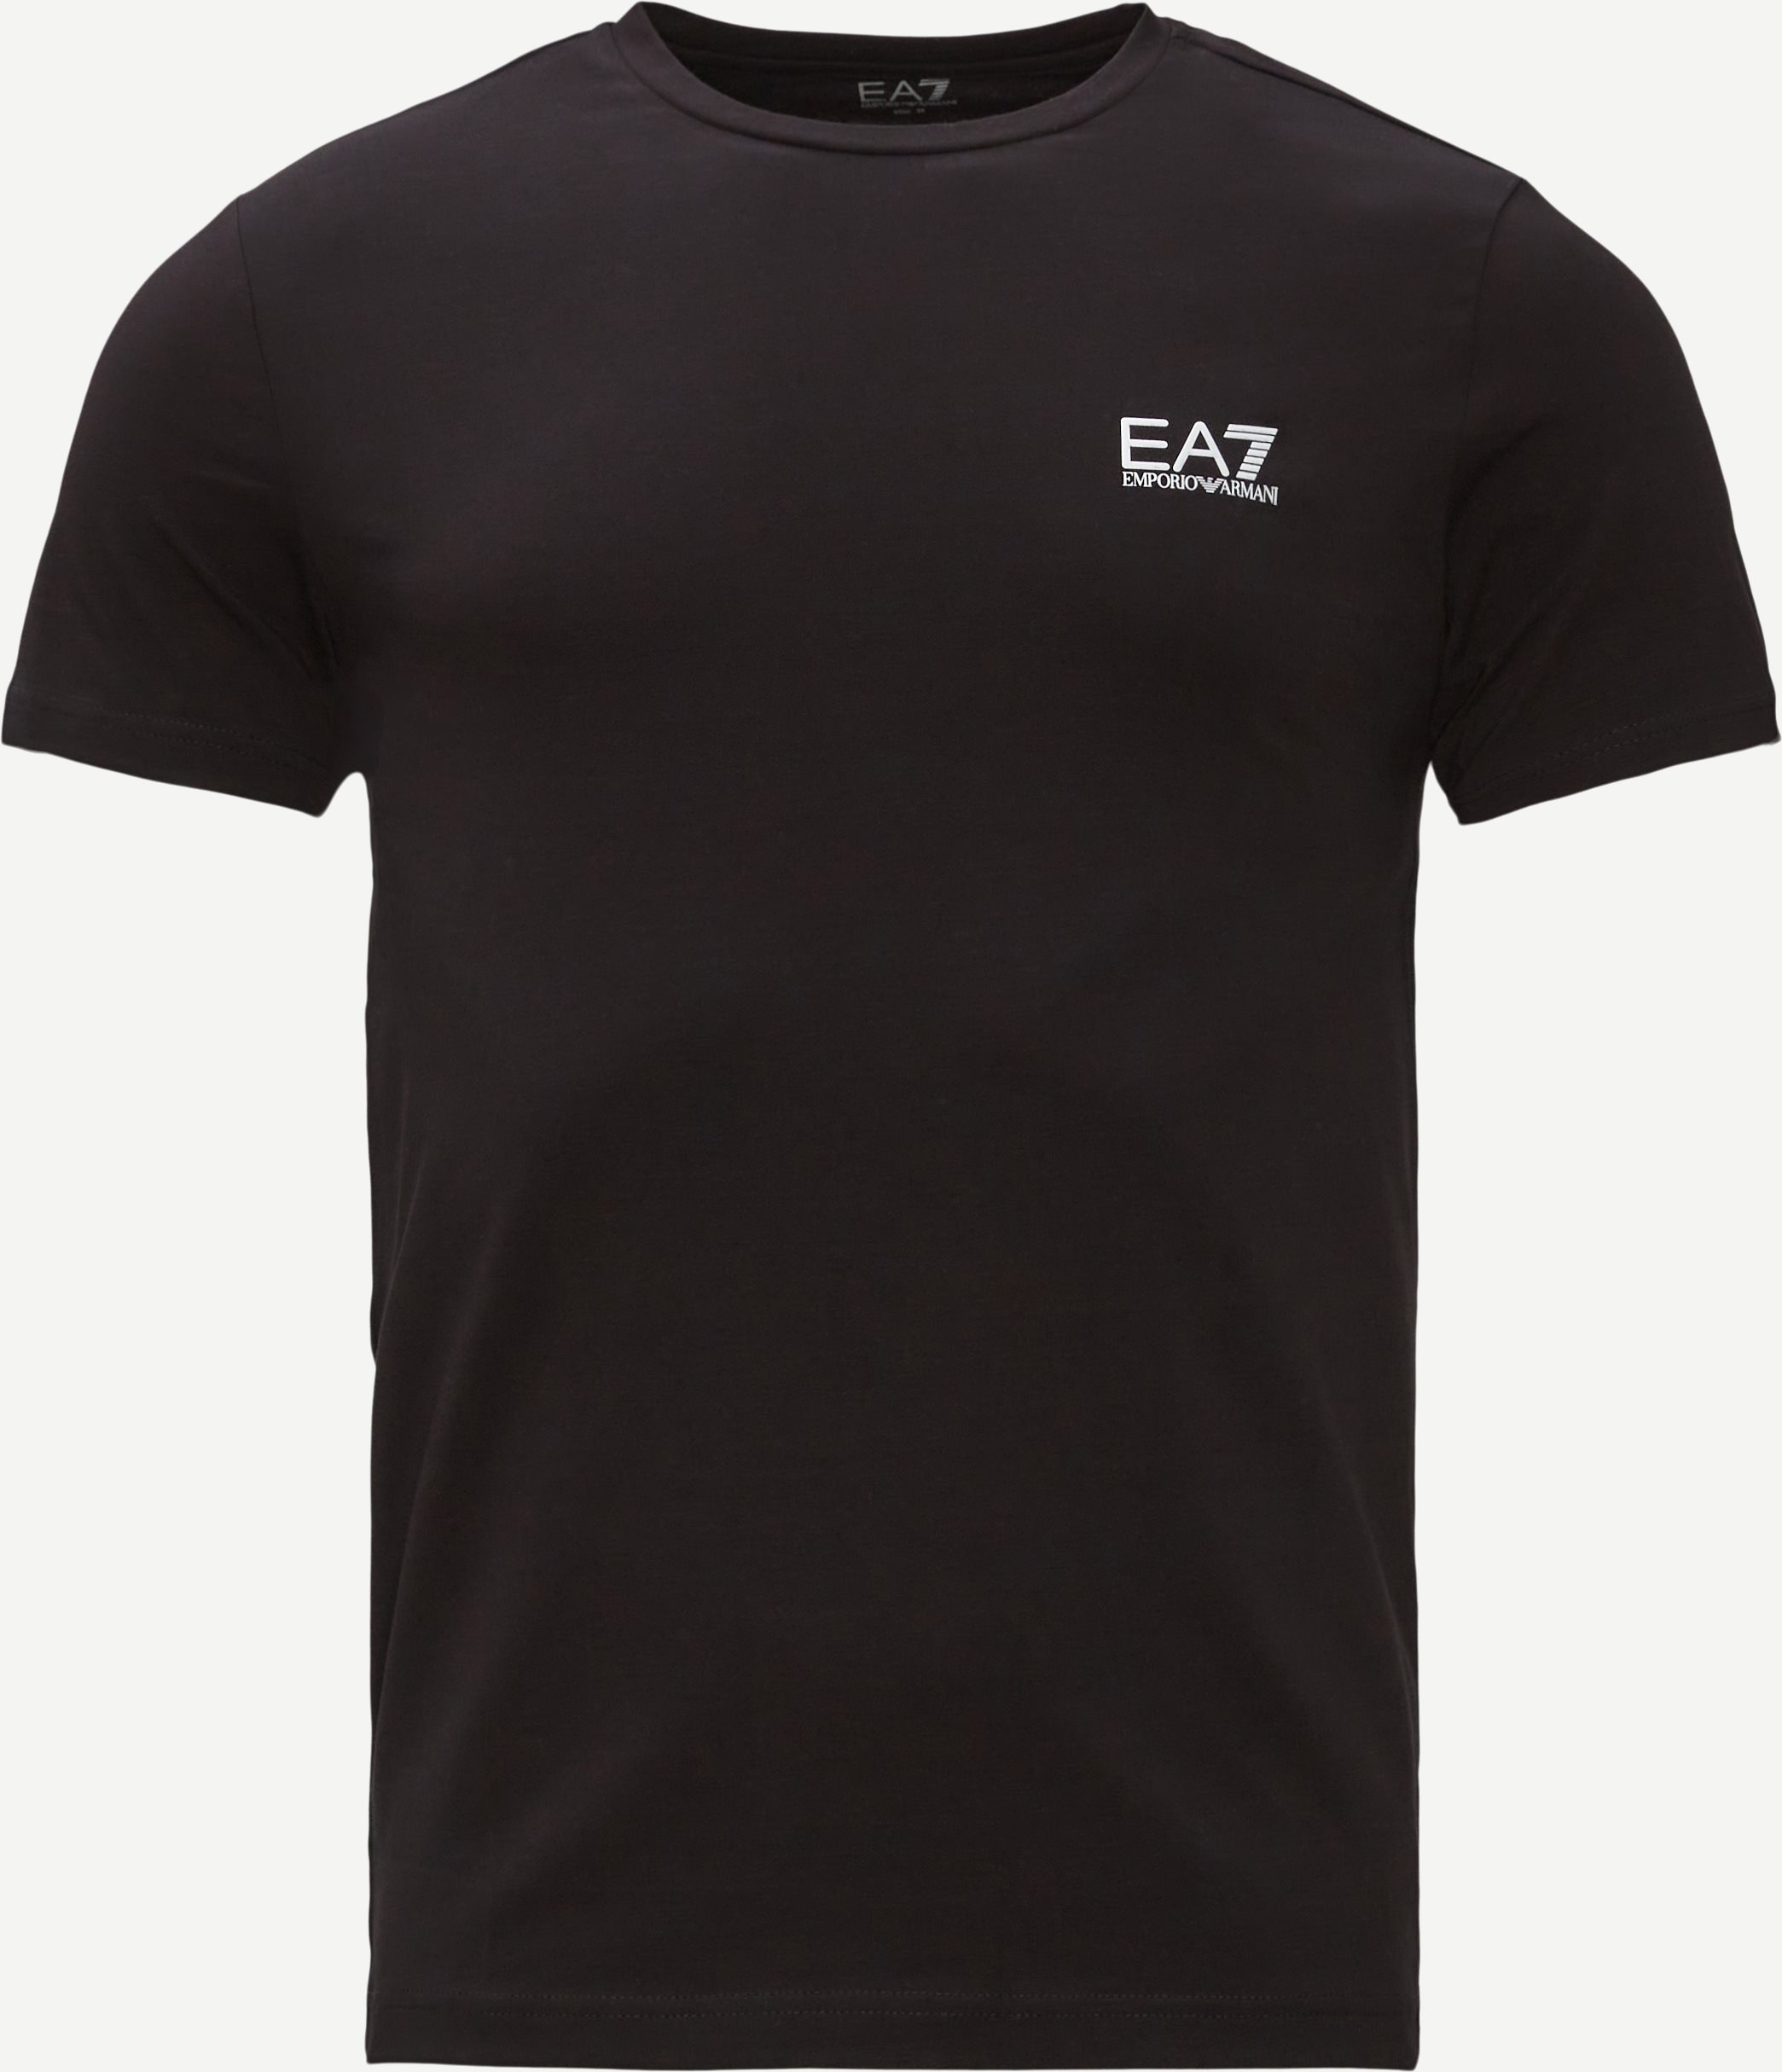 8NPT52 T-shirt - T-shirts - Regular fit - Black